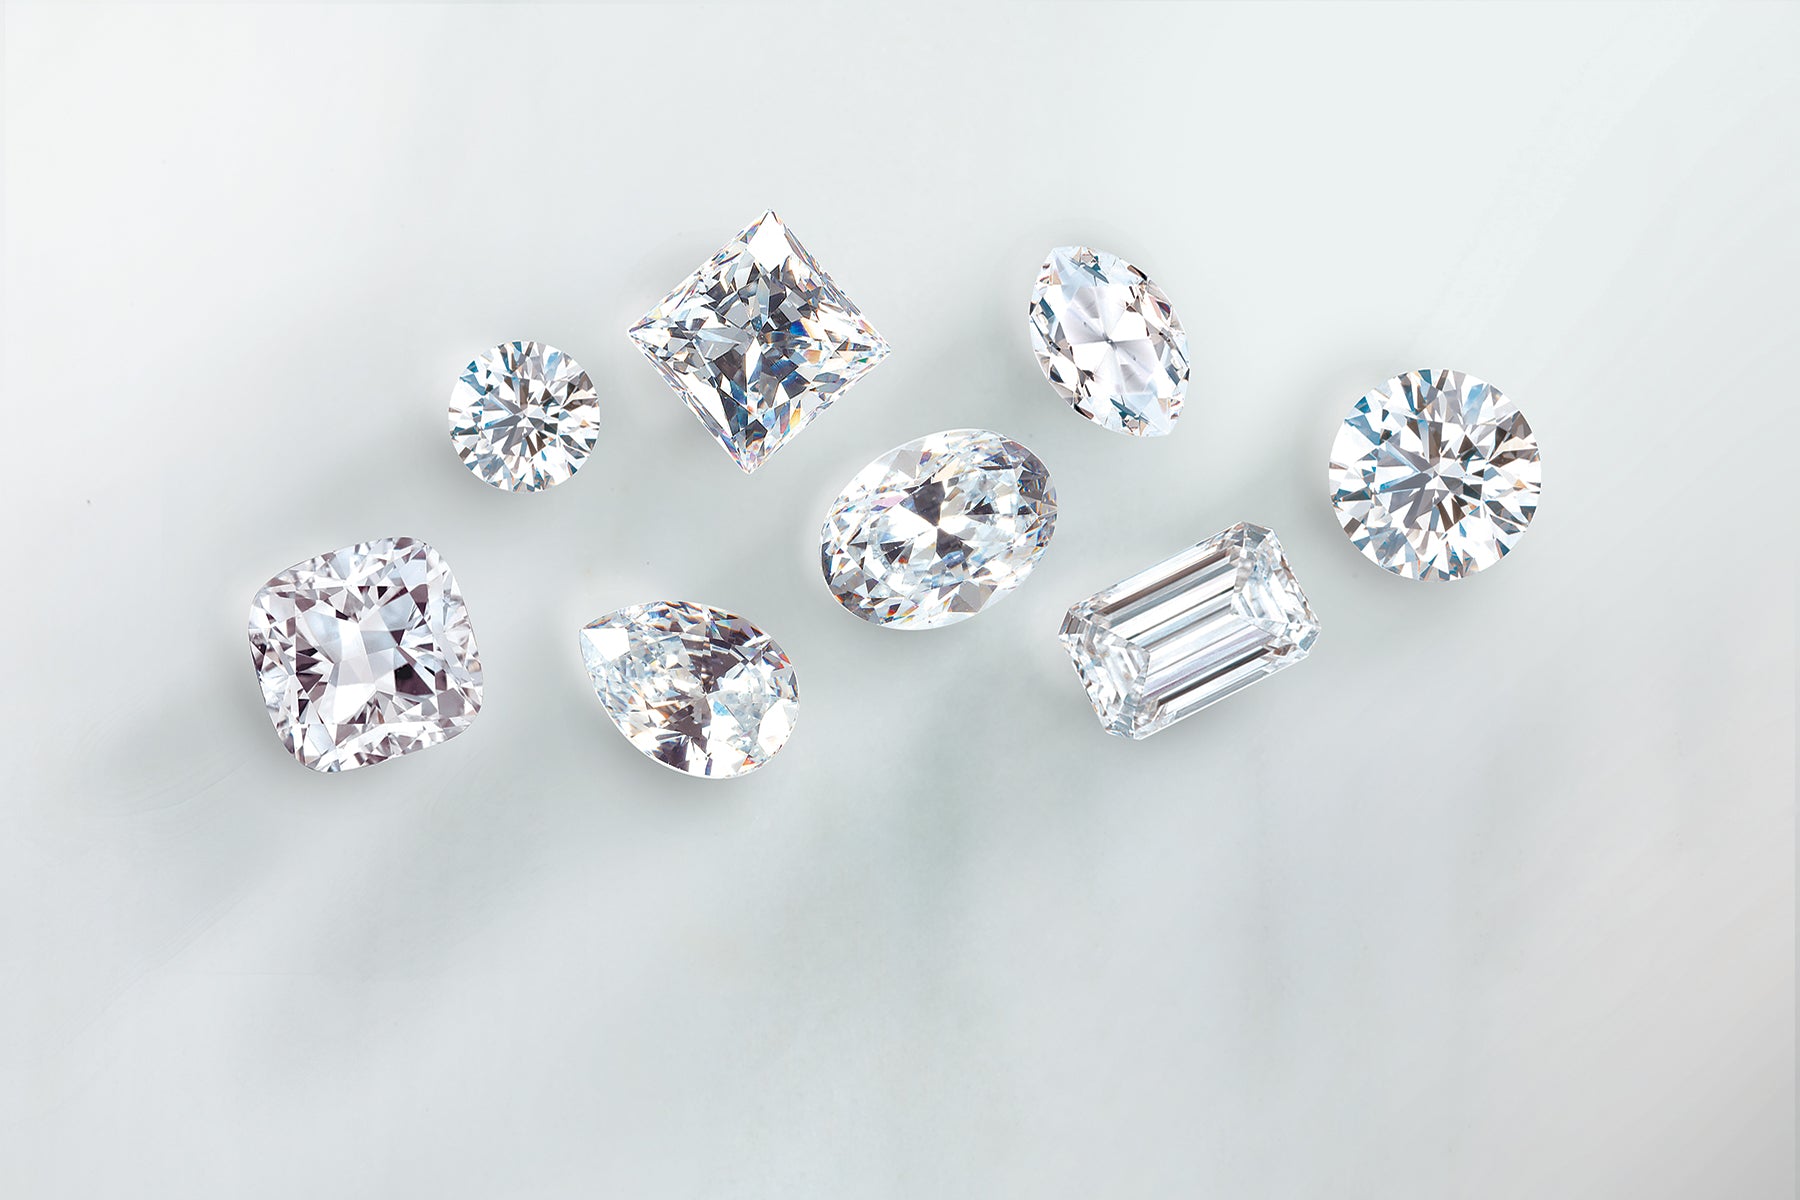 Soha Diamond Co. lab grown diamonds polish and symmetry